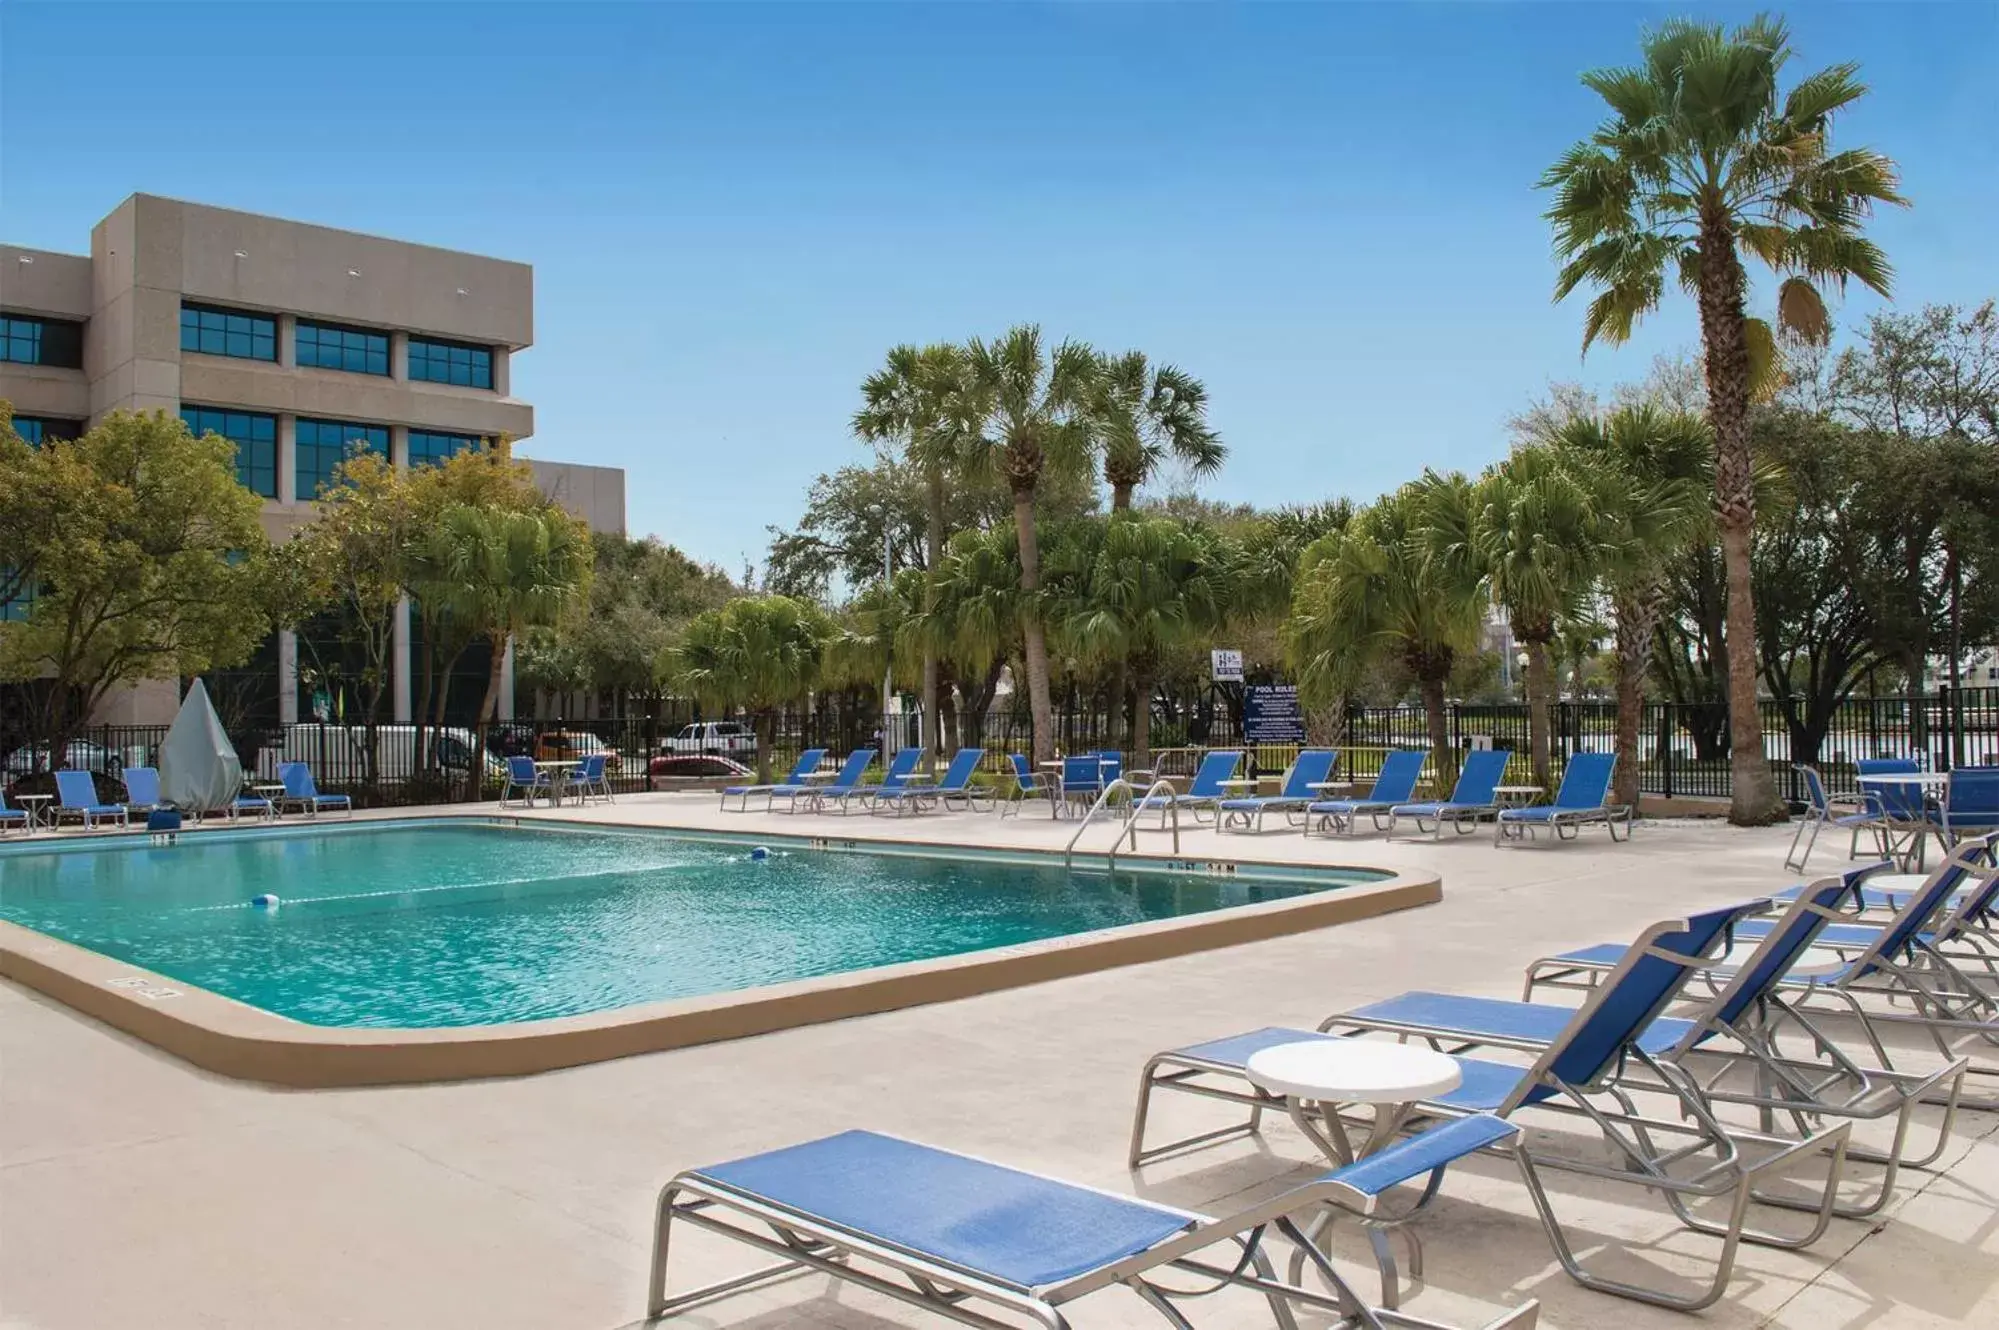 Swimming Pool in The Barrymore Hotel Tampa Riverwalk